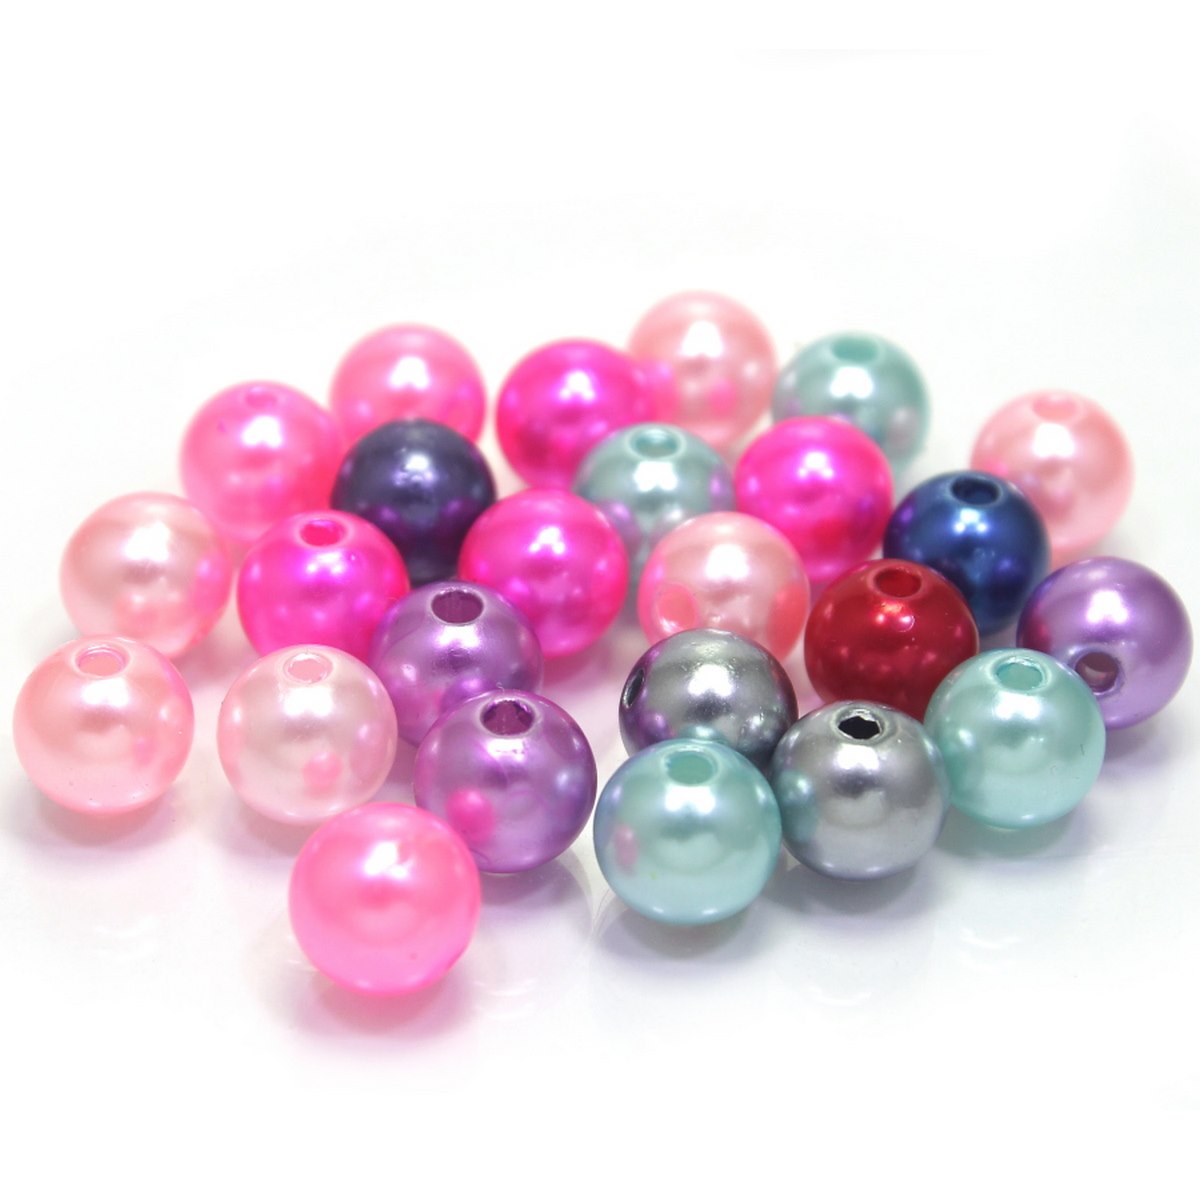 jags-mumbai Beads Craft Pearl Moti Colour 25gm 8MM